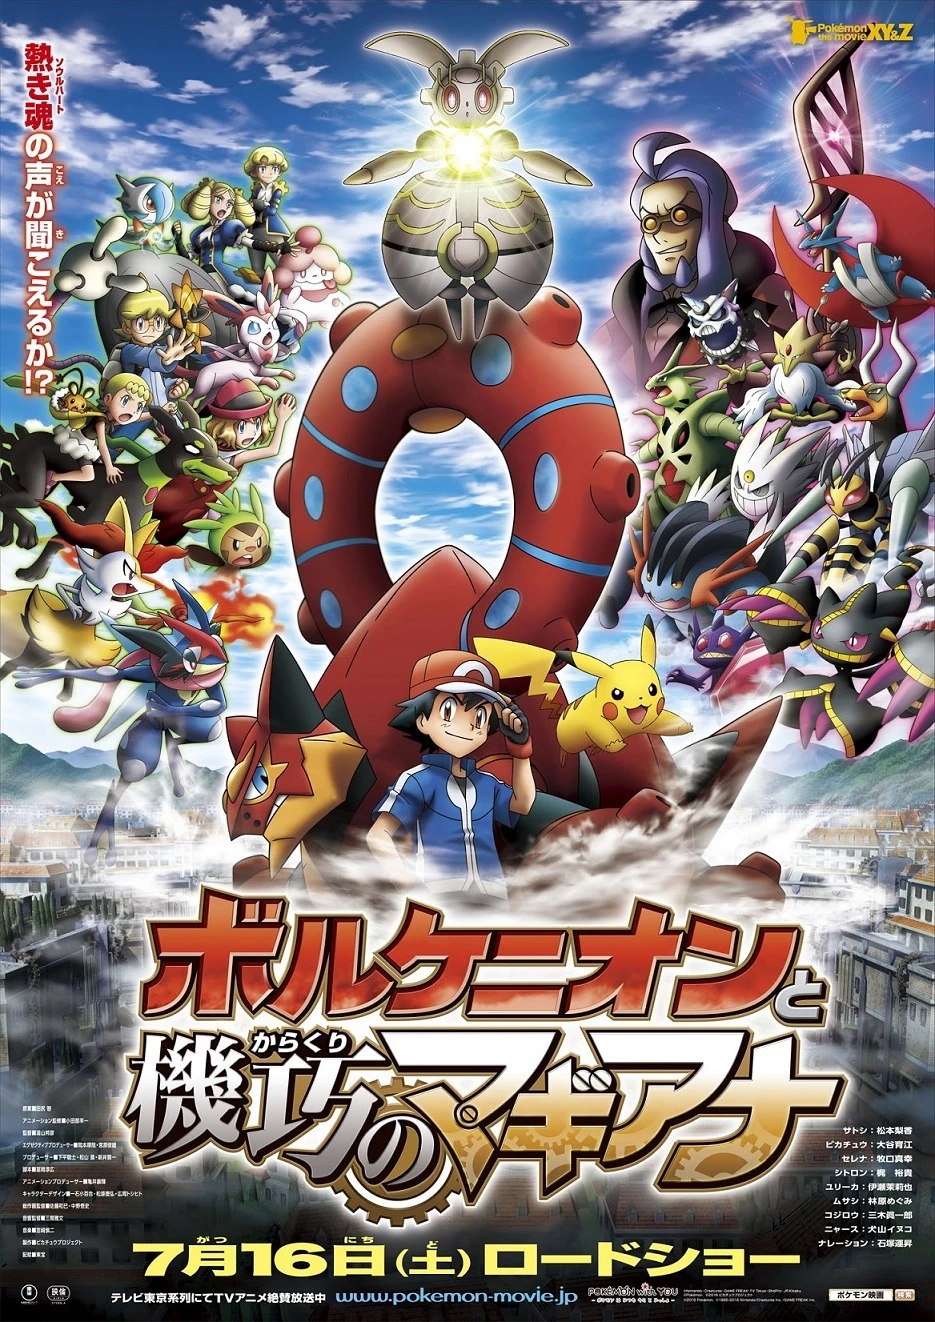 Prime Video: Pokémon Ranger E O Lendário Templo Do Mar